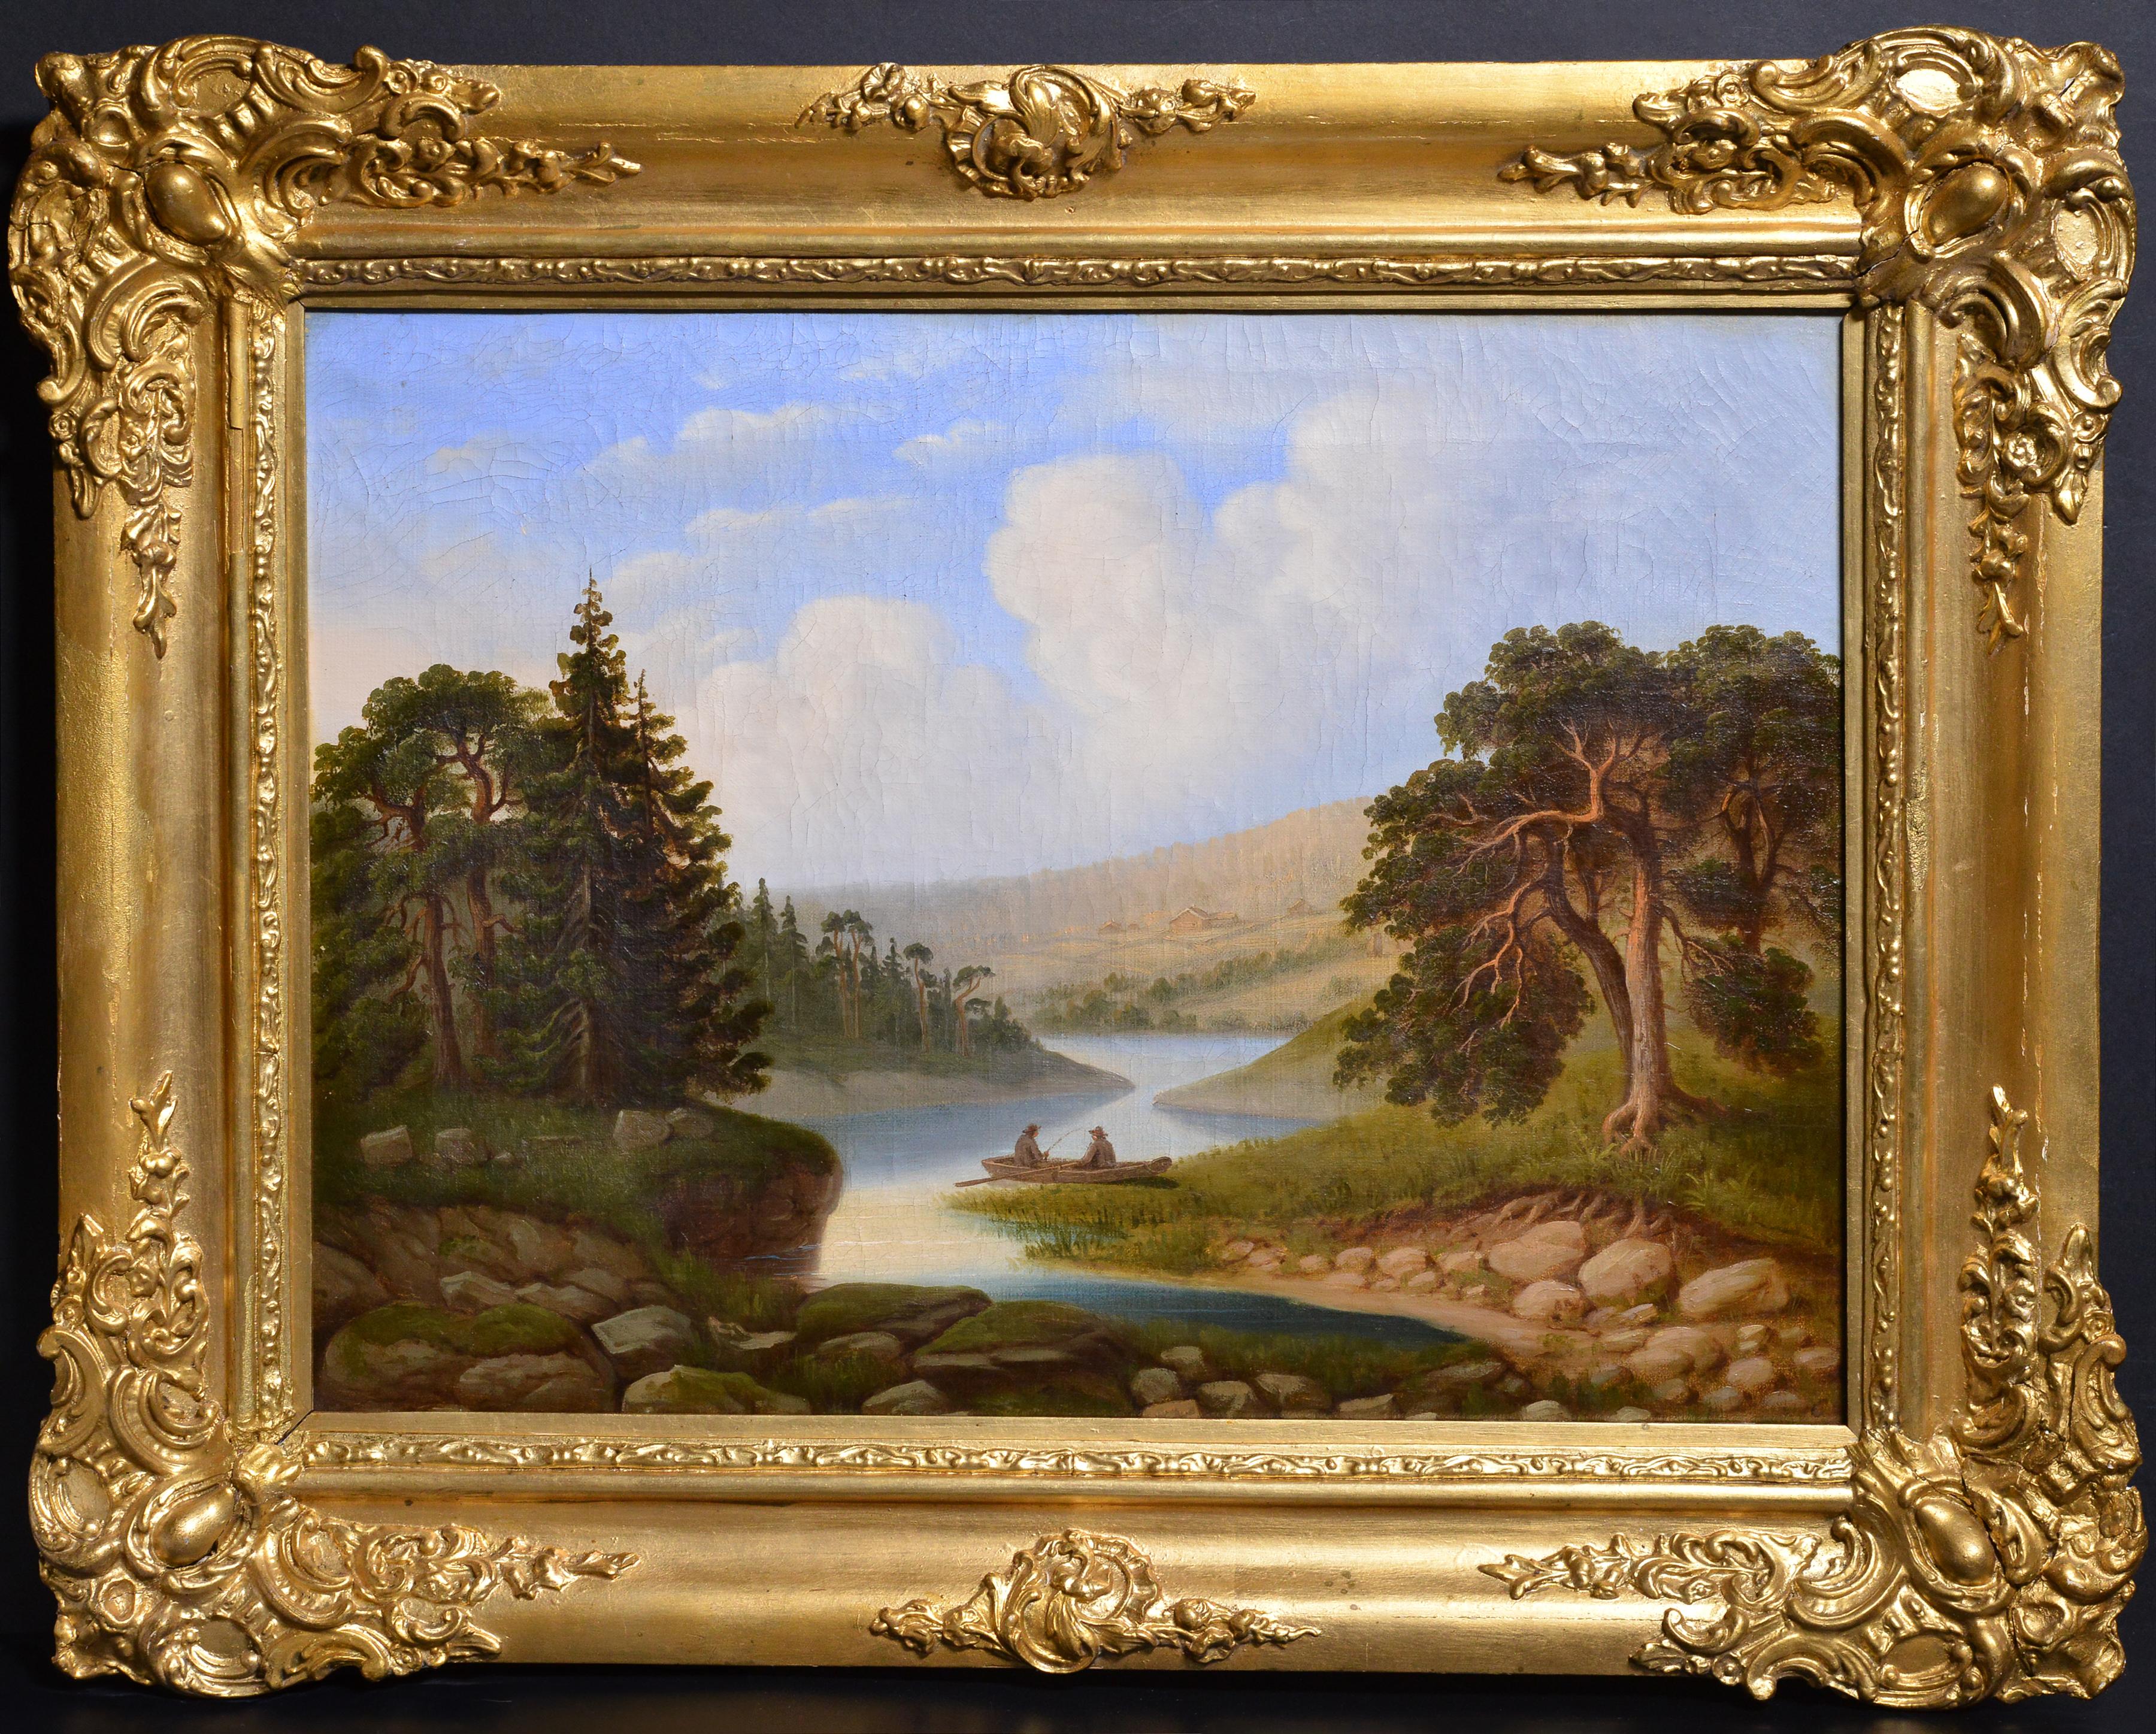 Fishermen on River Idyllic Scandinavian Landscape 19th century Oil Painting